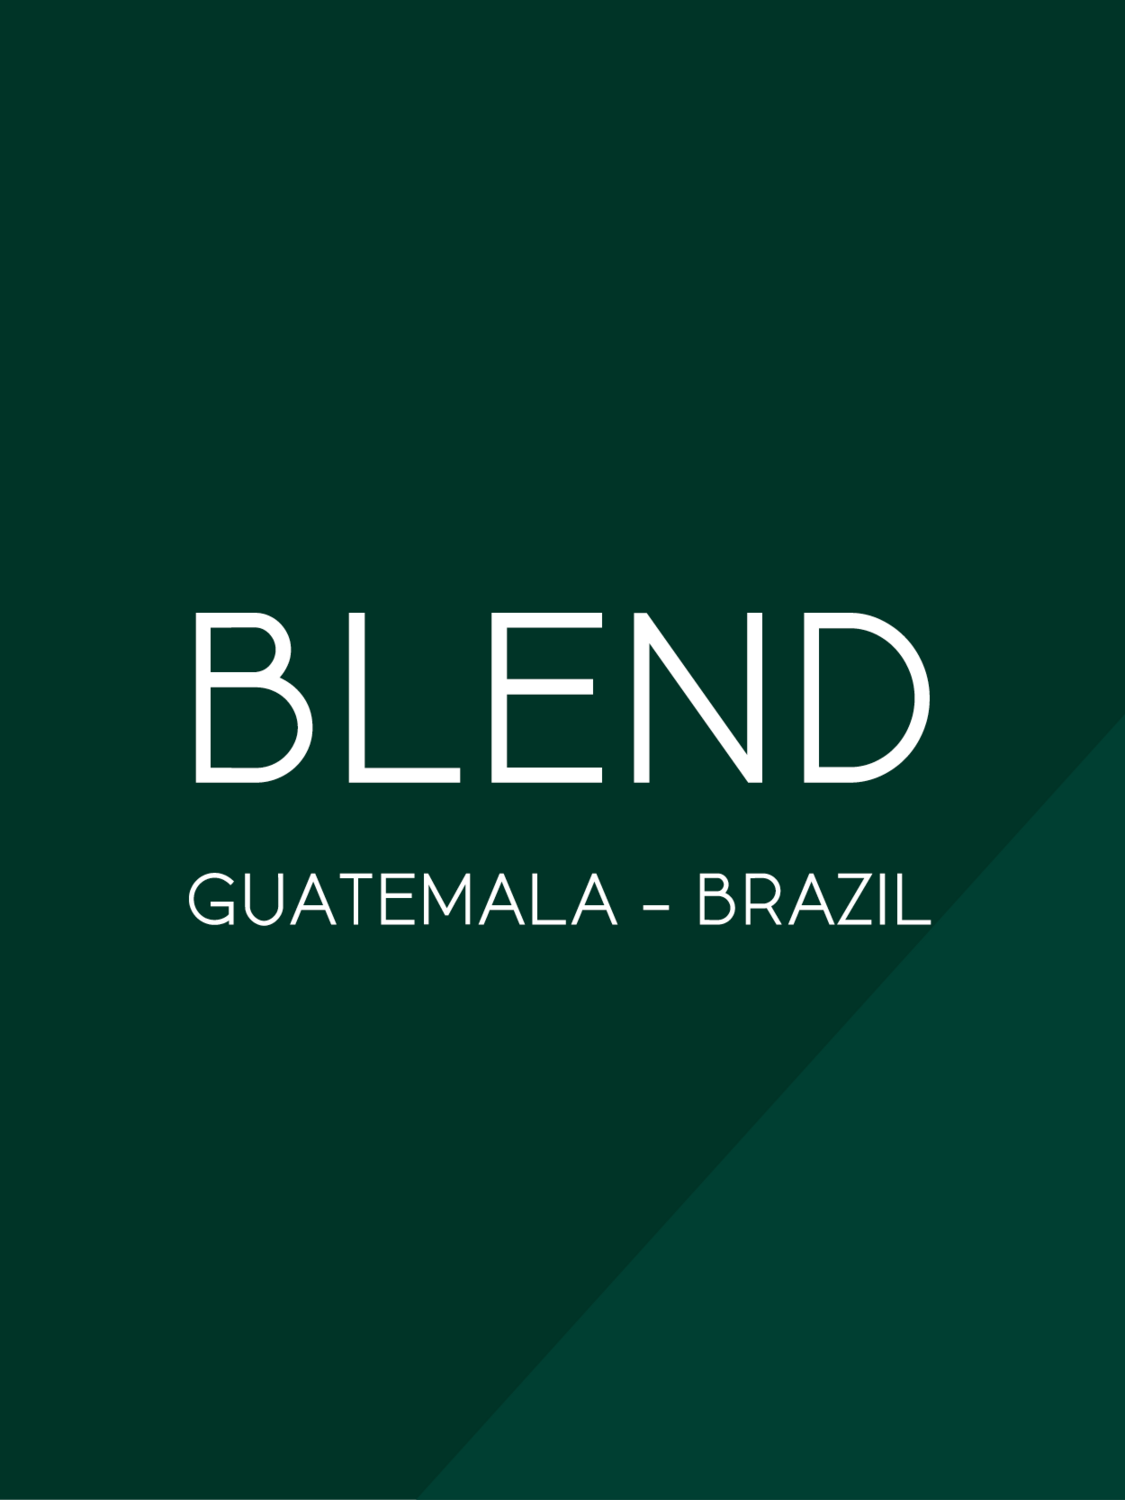 Blend Guatemala - Brazil